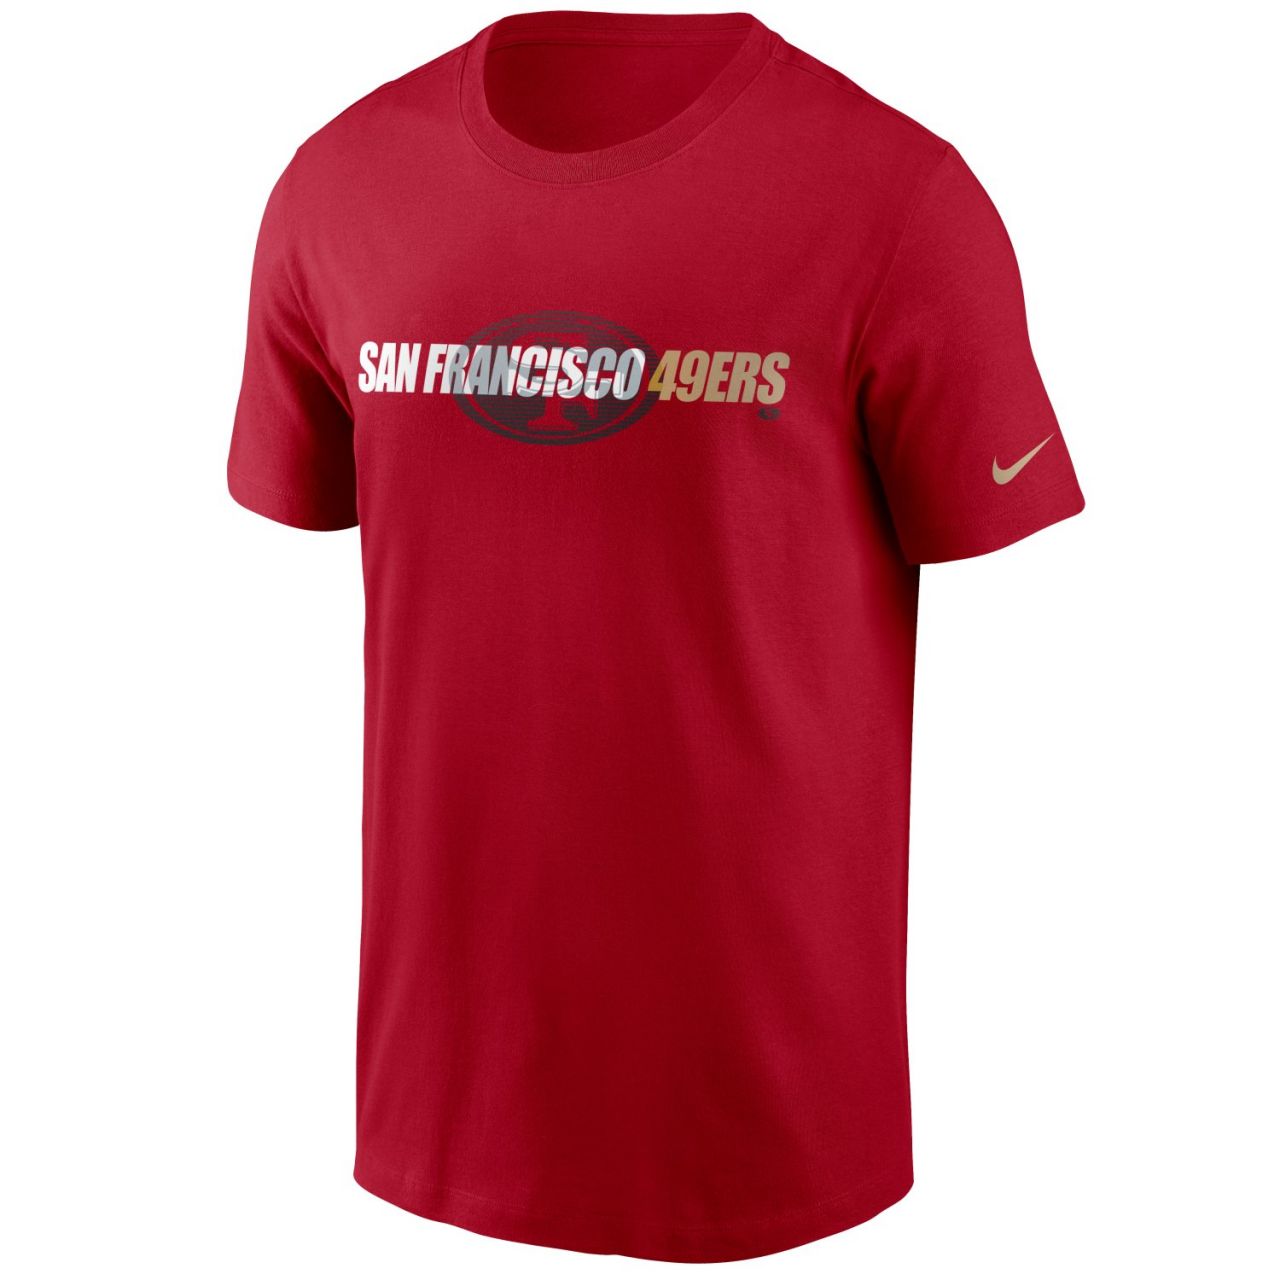 amfoo - Nike NFL Tonal Essential Shirt - San Francisco 49ers